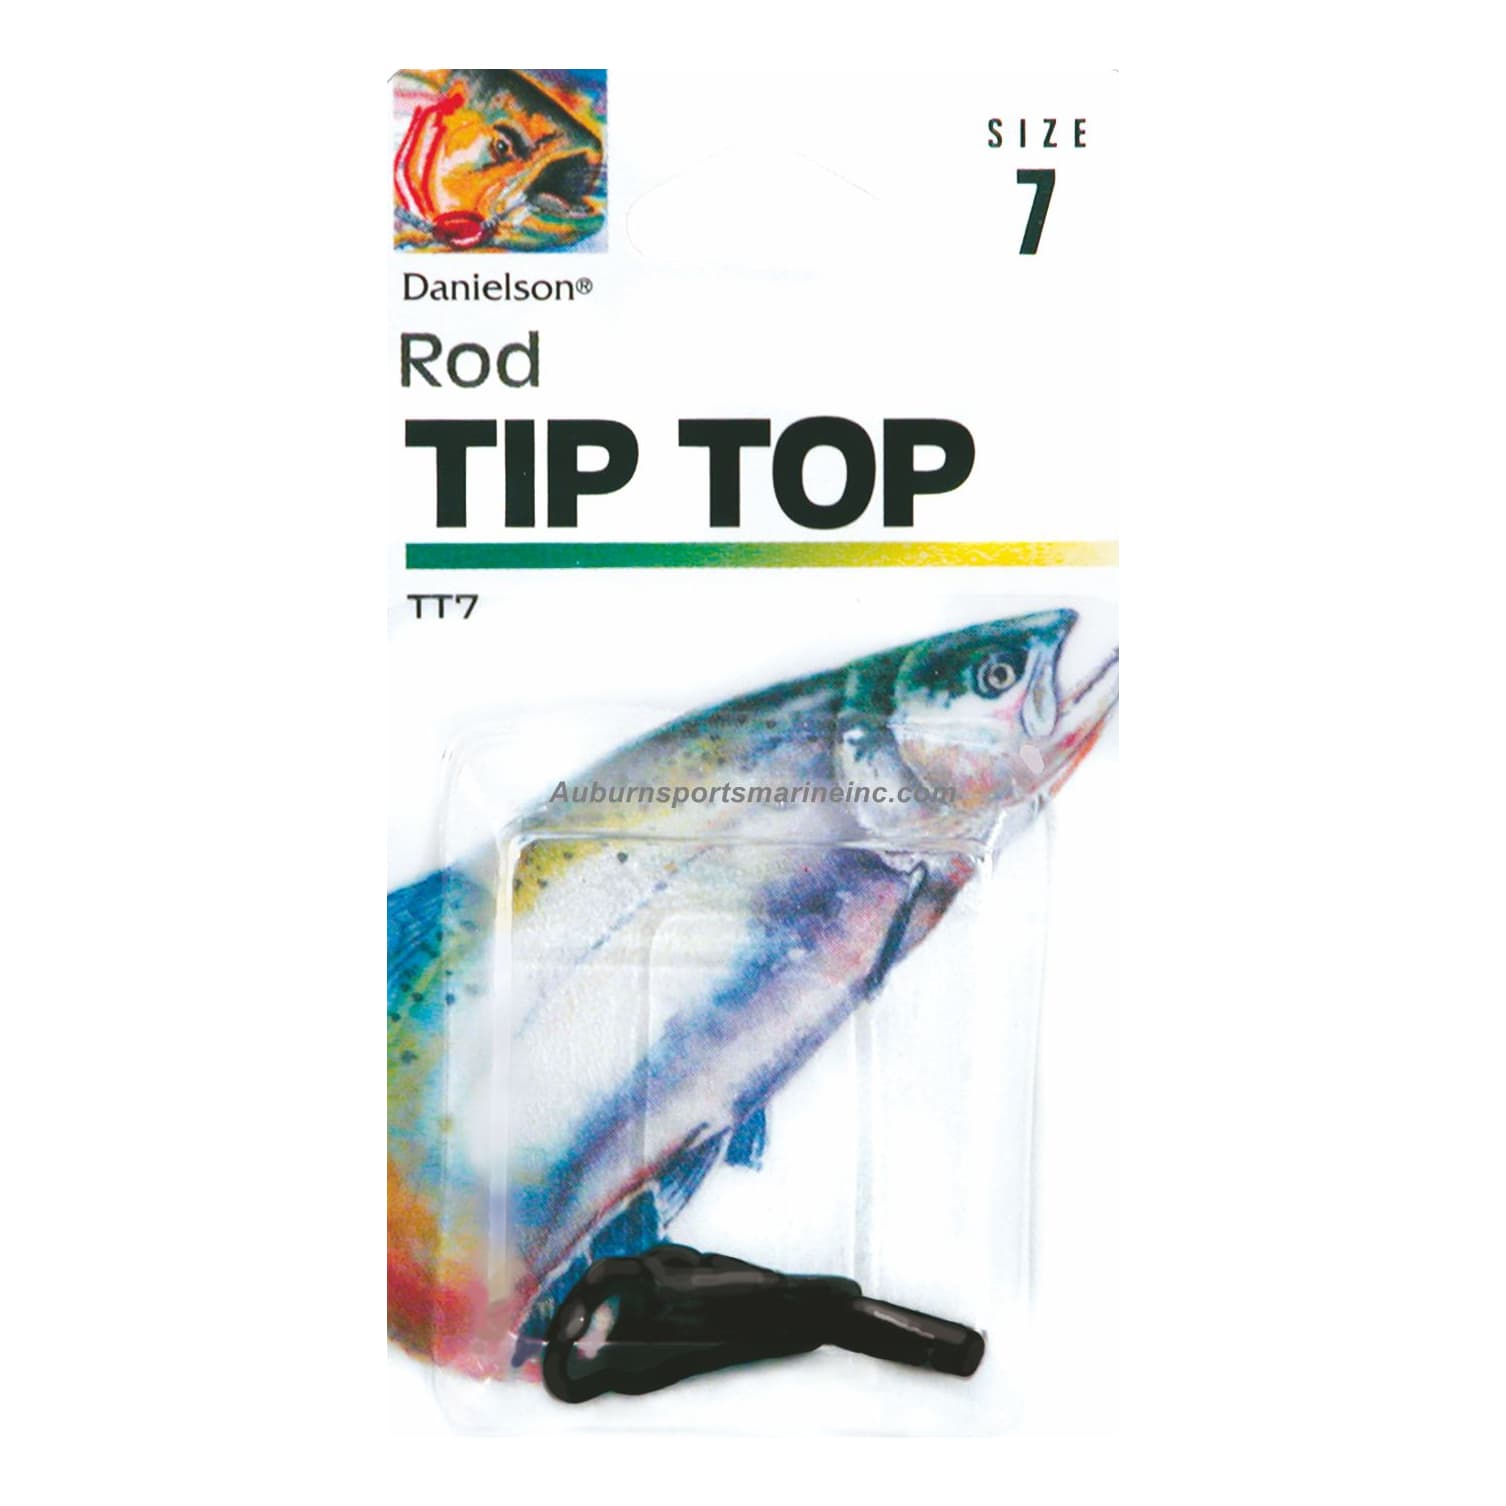 Fishing Rod Repair & Bells: Repair Kits for Rod Tips, Eyes